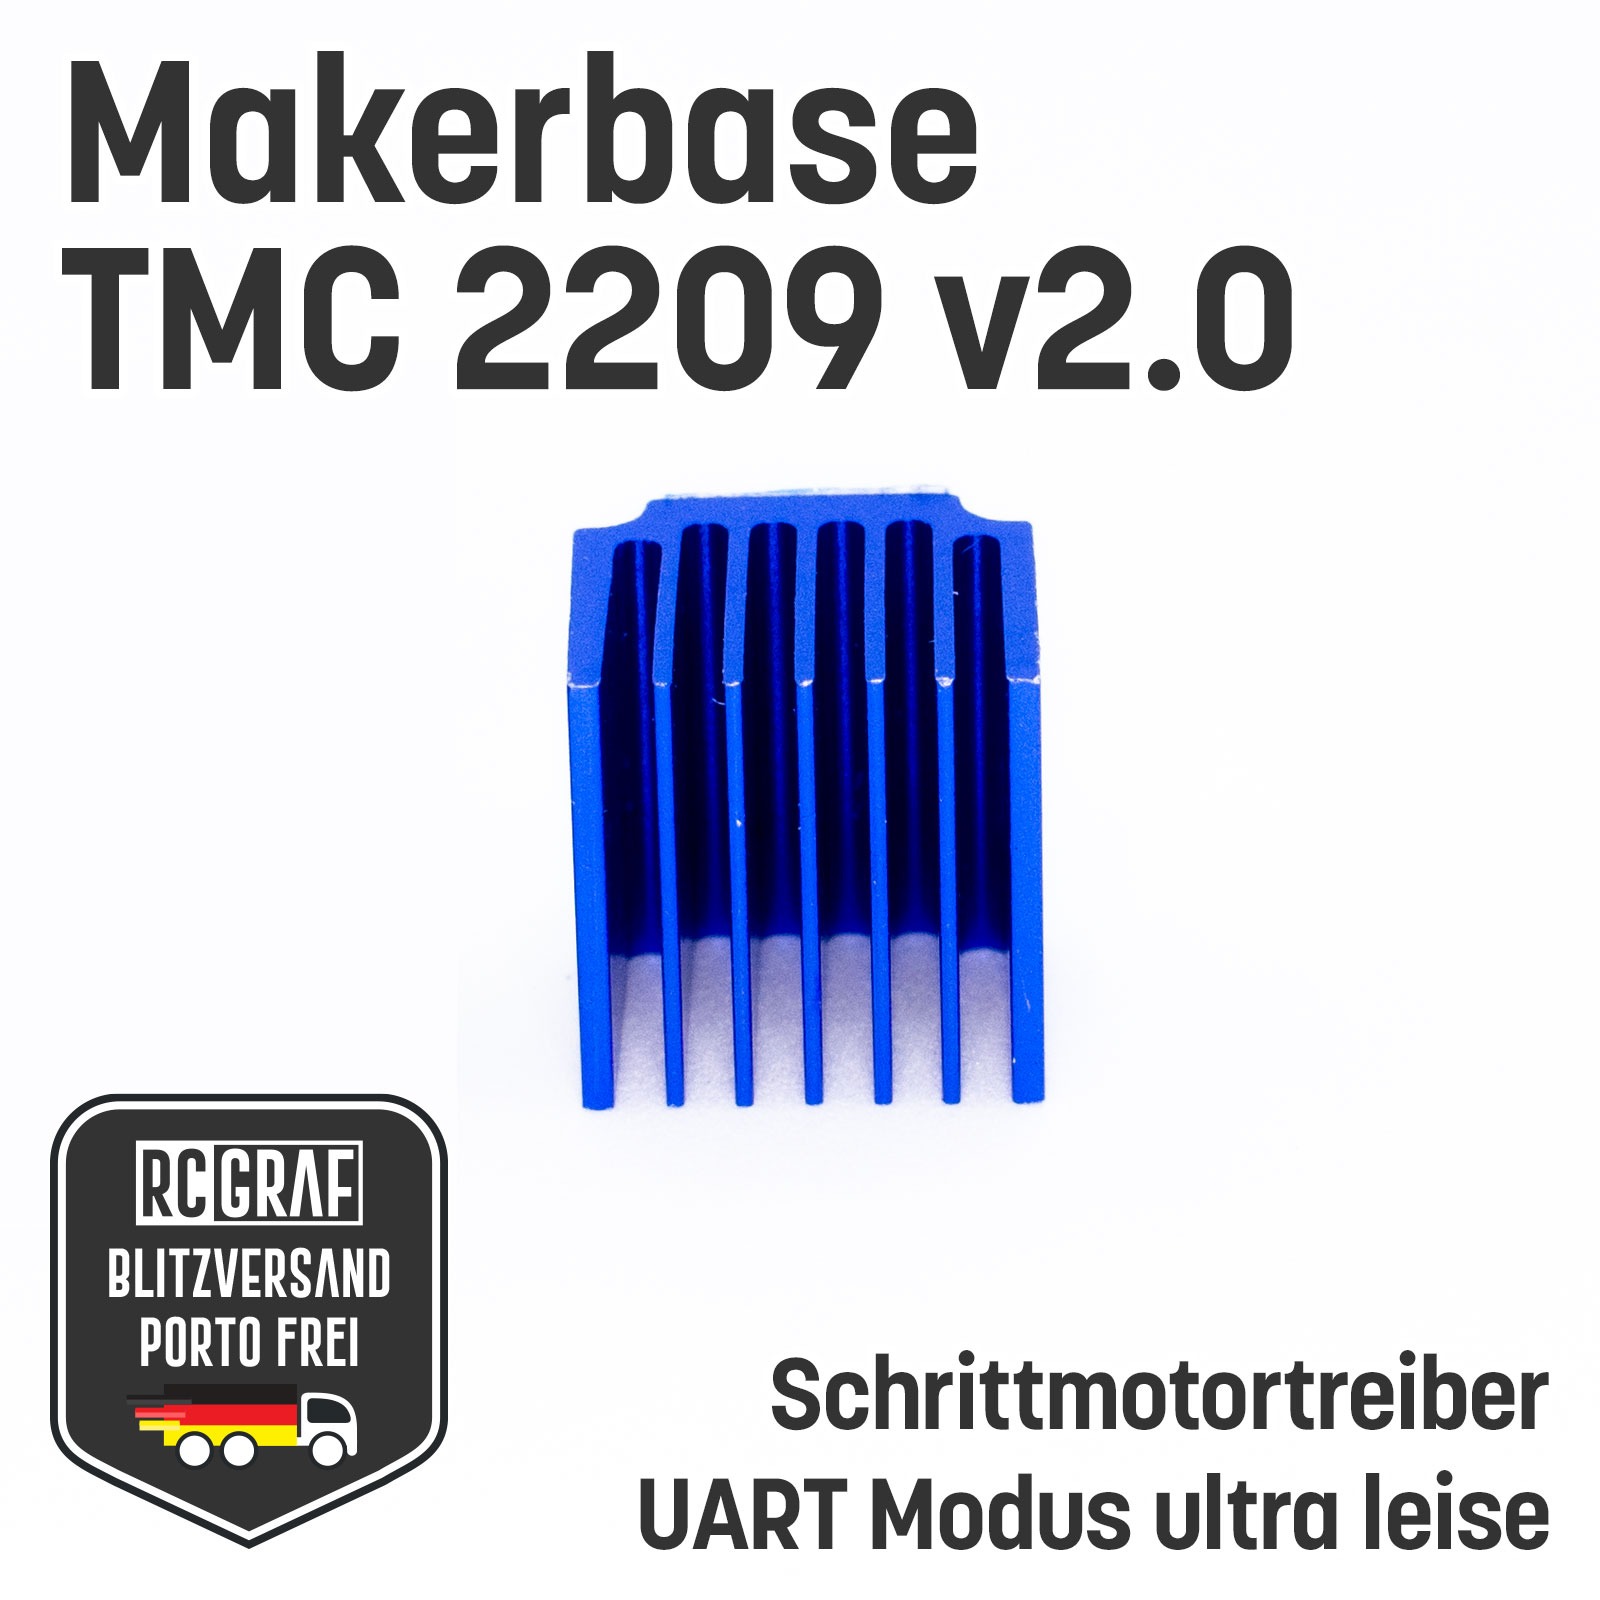 Makerbase TMC2209 V20 Schrittmotortreiber UART Modus ultra leise 5